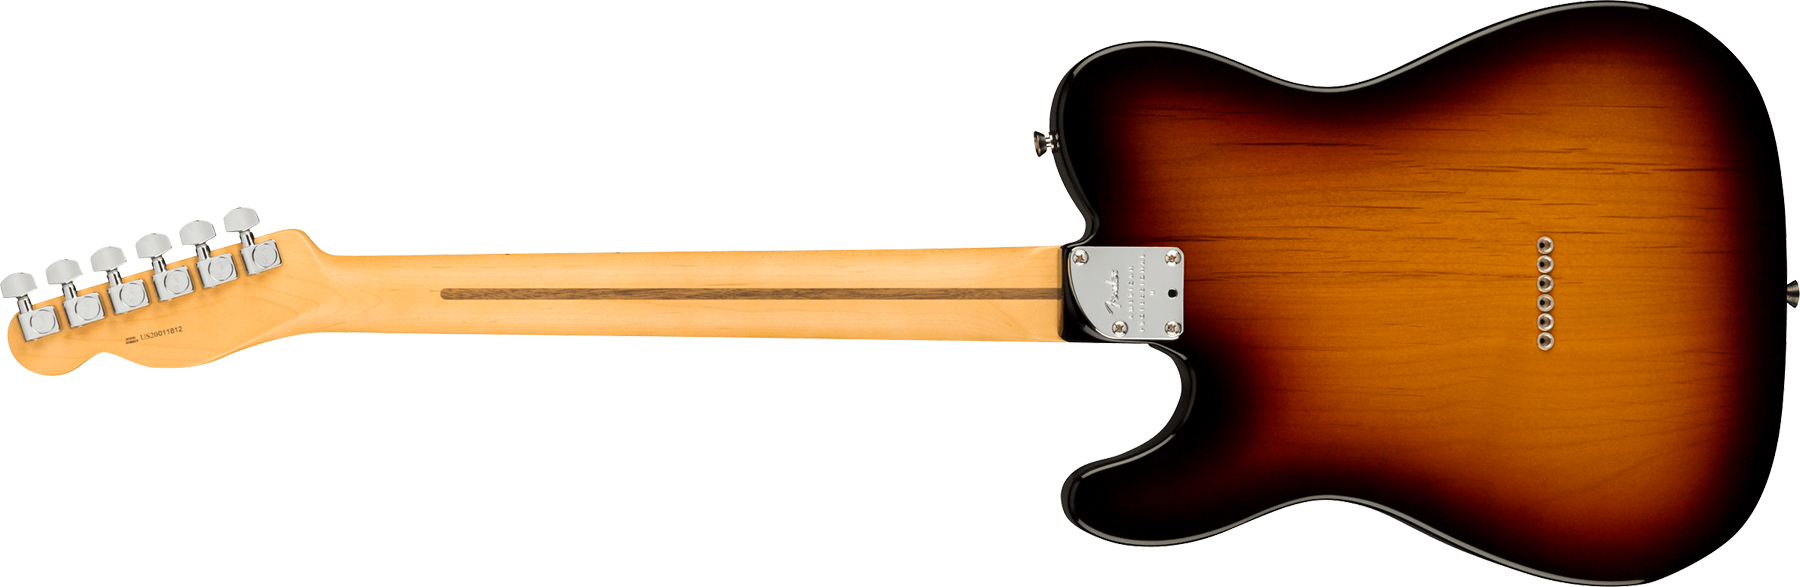 Fender Tele American Professional Ii Usa Rw - 3-color Sunburst - Televorm elektrische gitaar - Variation 1